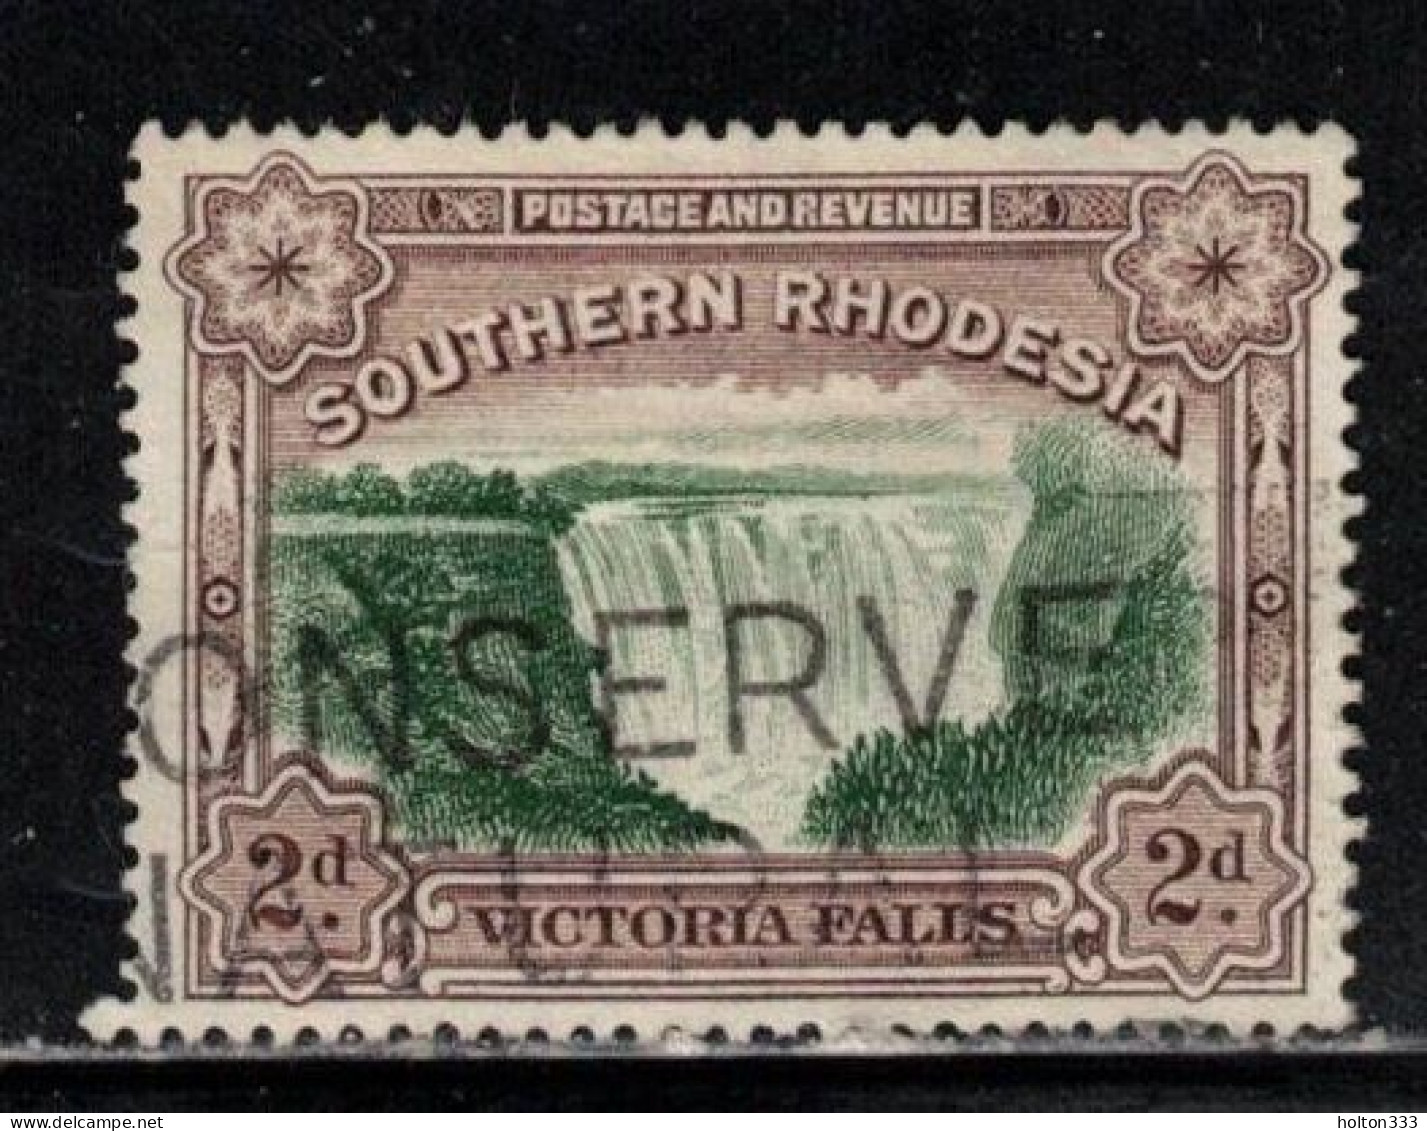 SOUTHERN RHODESIA Scott # 31 Used - Victoria Falls - Southern Rhodesia (...-1964)